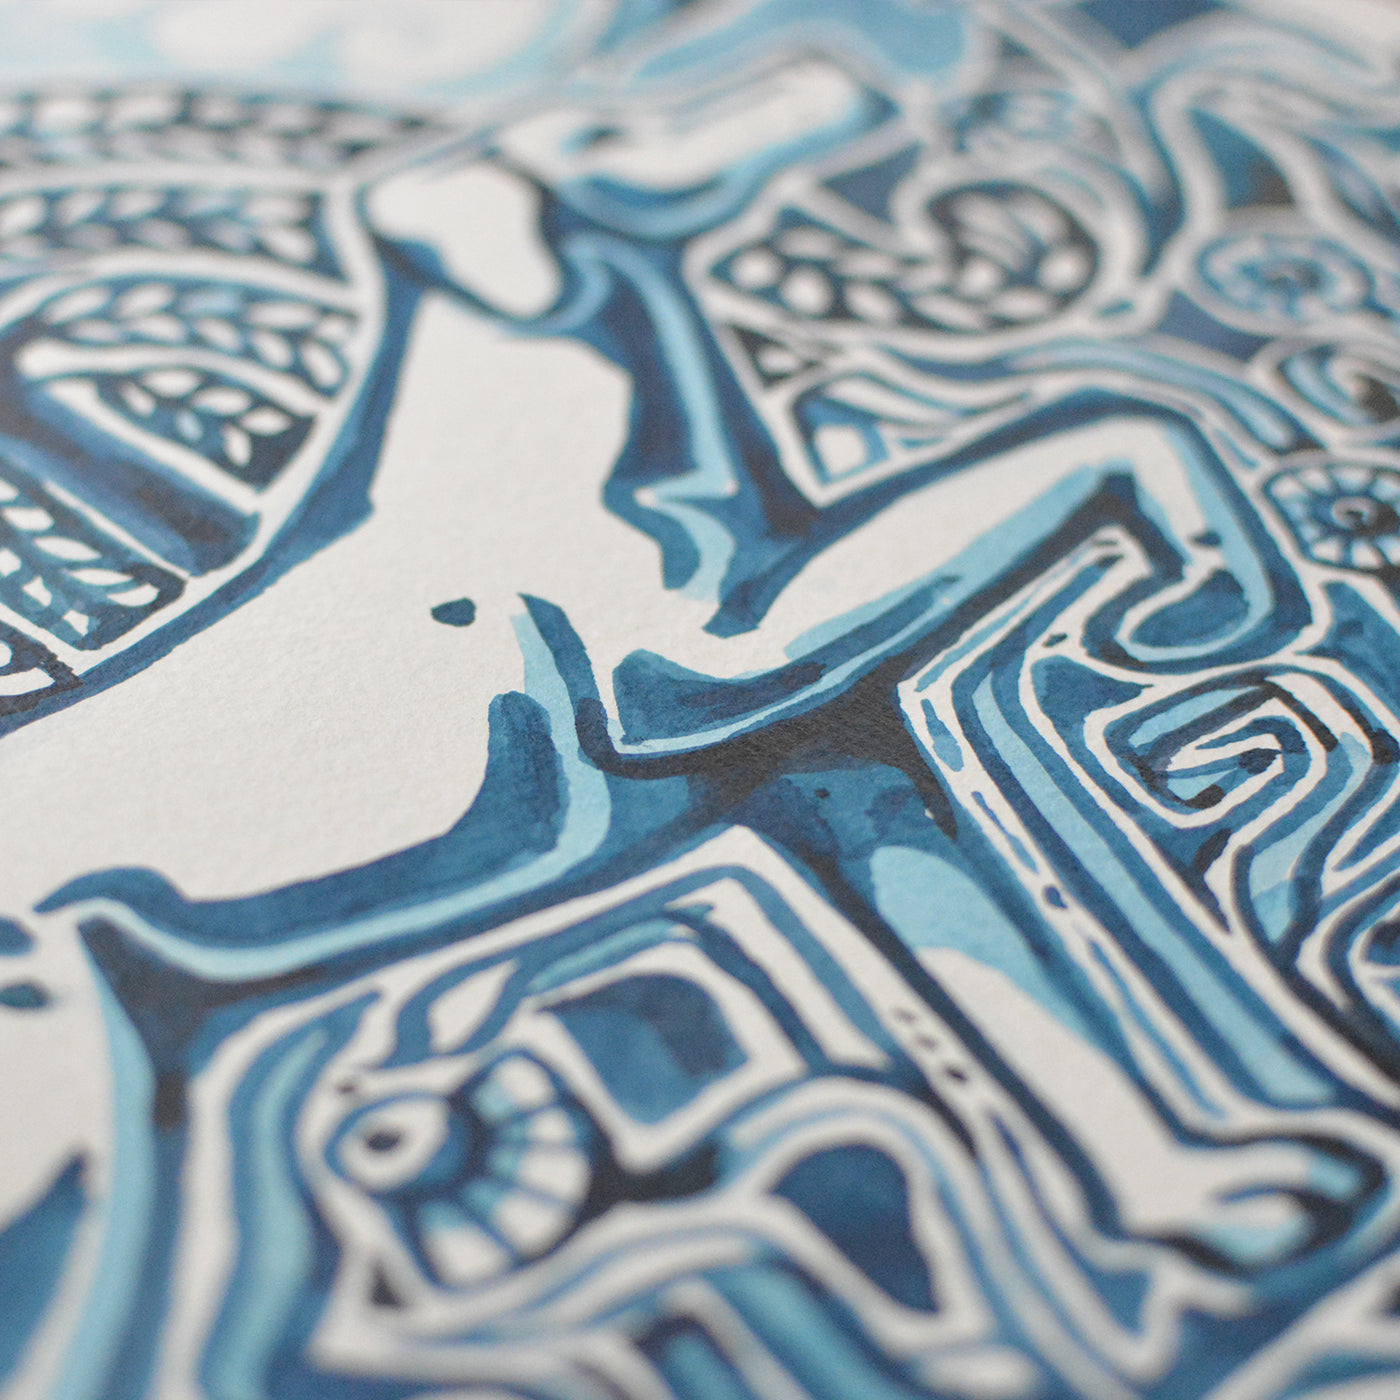 Adam Trest Blue Willow | Bird Dog Print